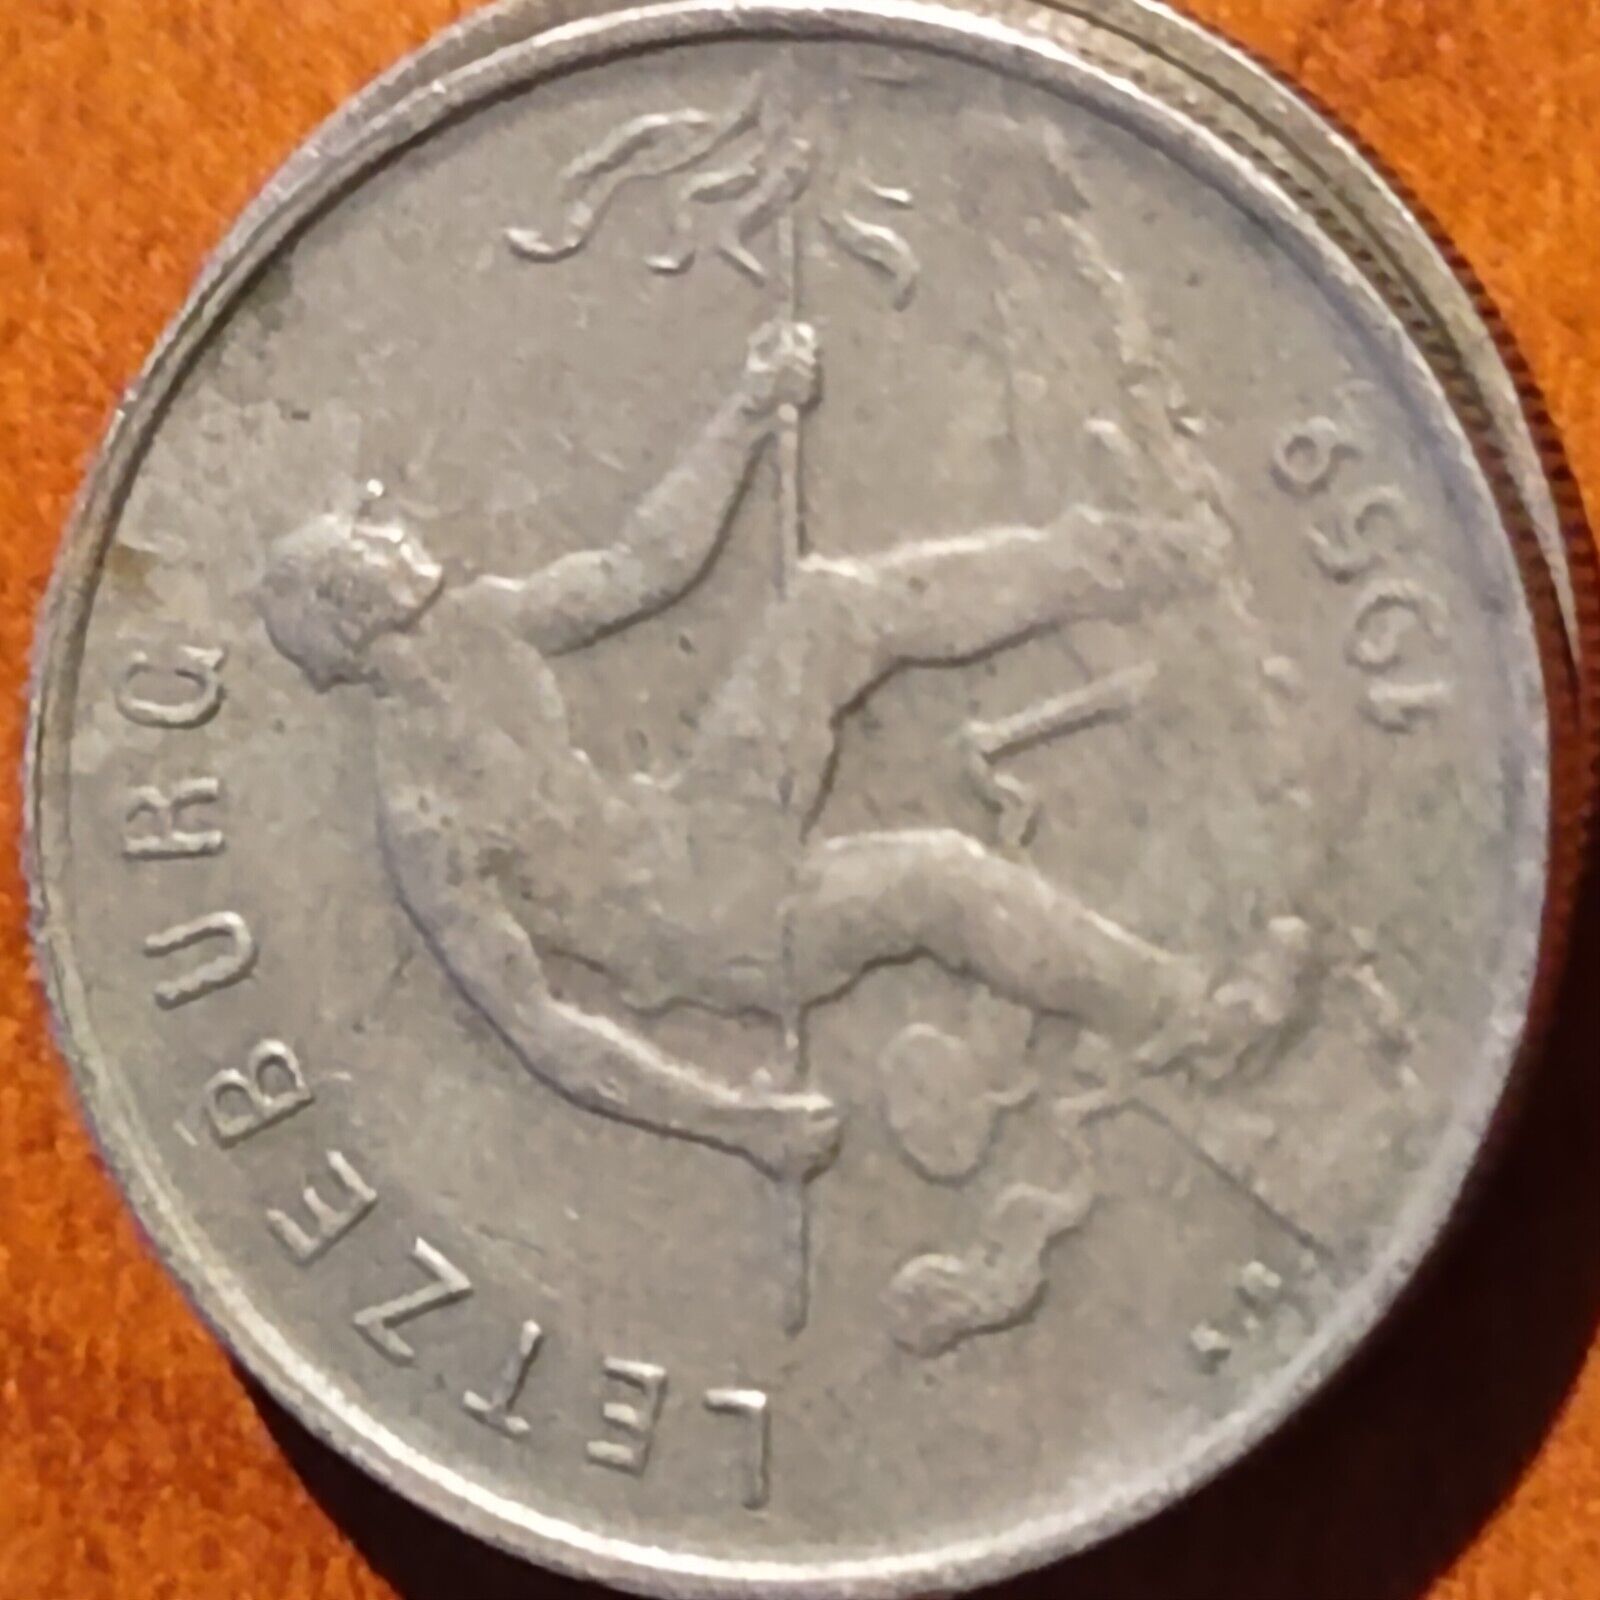 Letzeburg - 1952 One Franc Vintage Coin